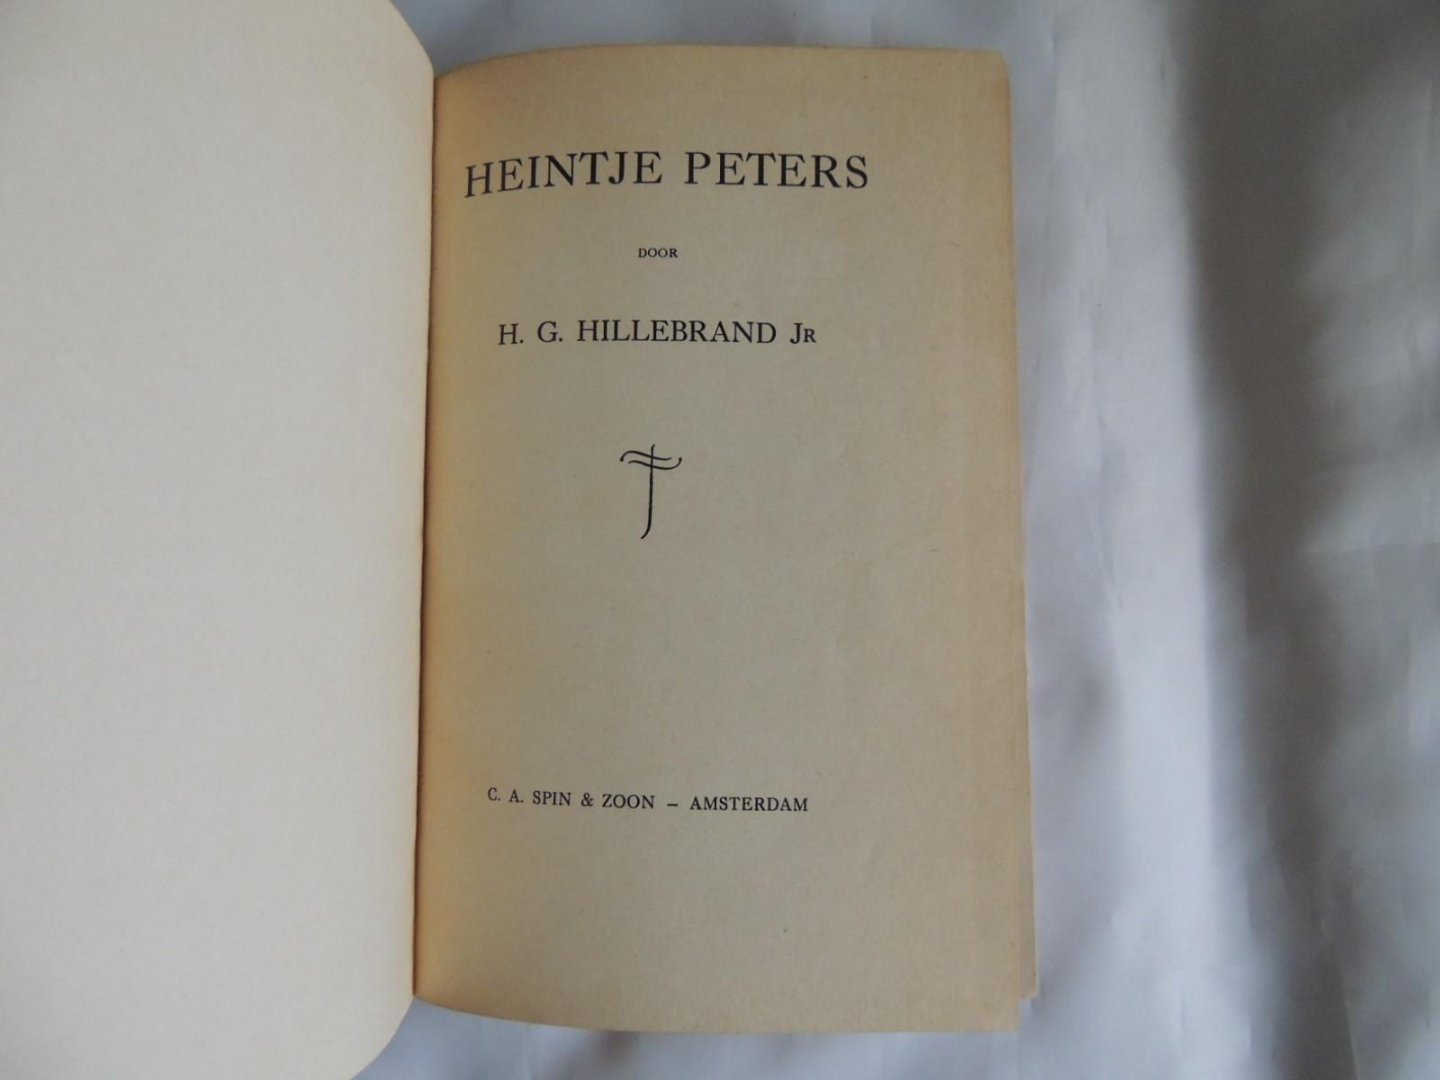 Hildebrand Jr, H.G. - Heintje Peters